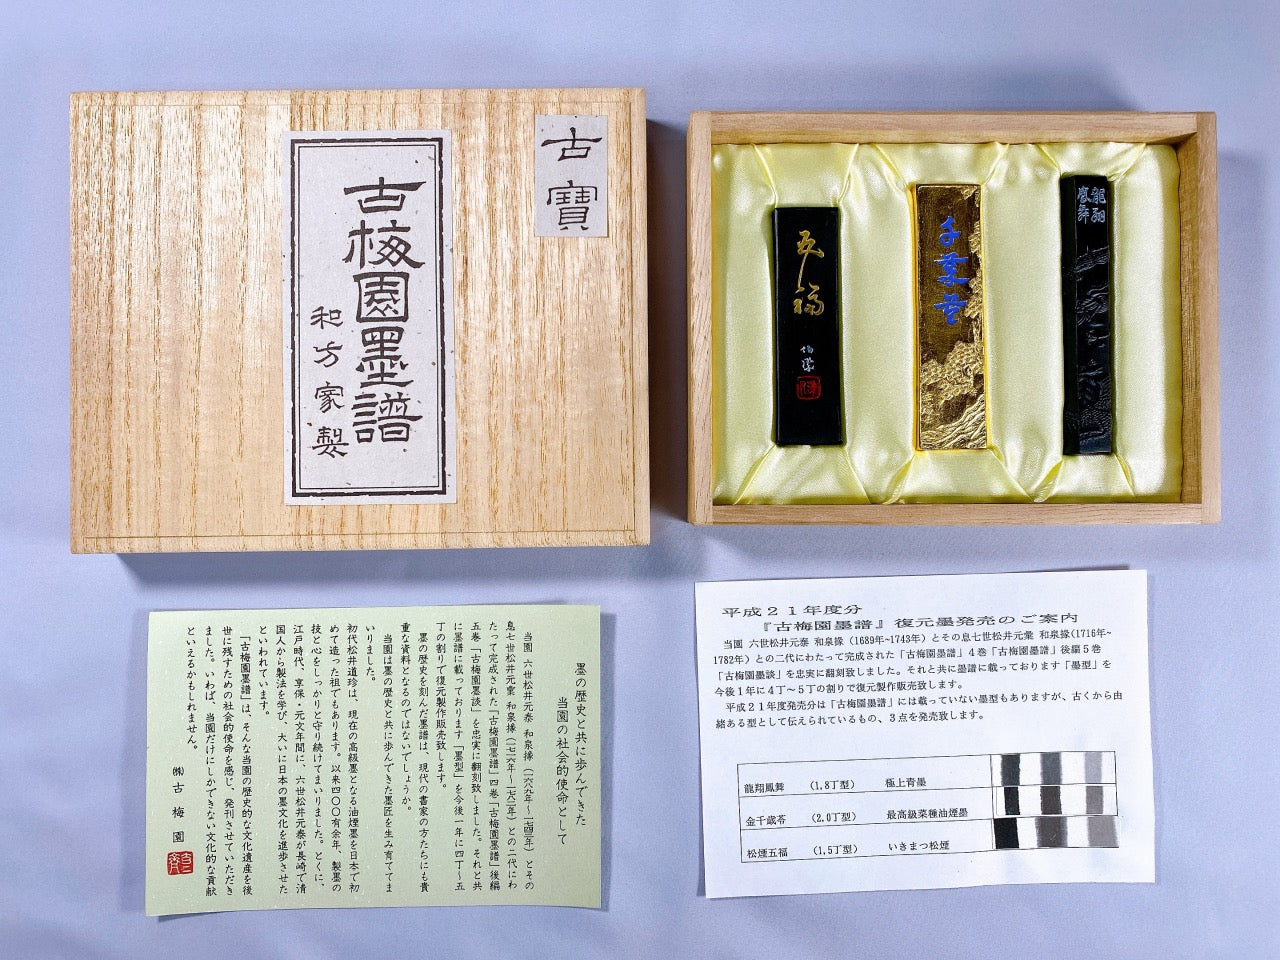 Bokufu 2009 - Kobaien's special inkstick year selection ( 古梅園墨譜2009 )